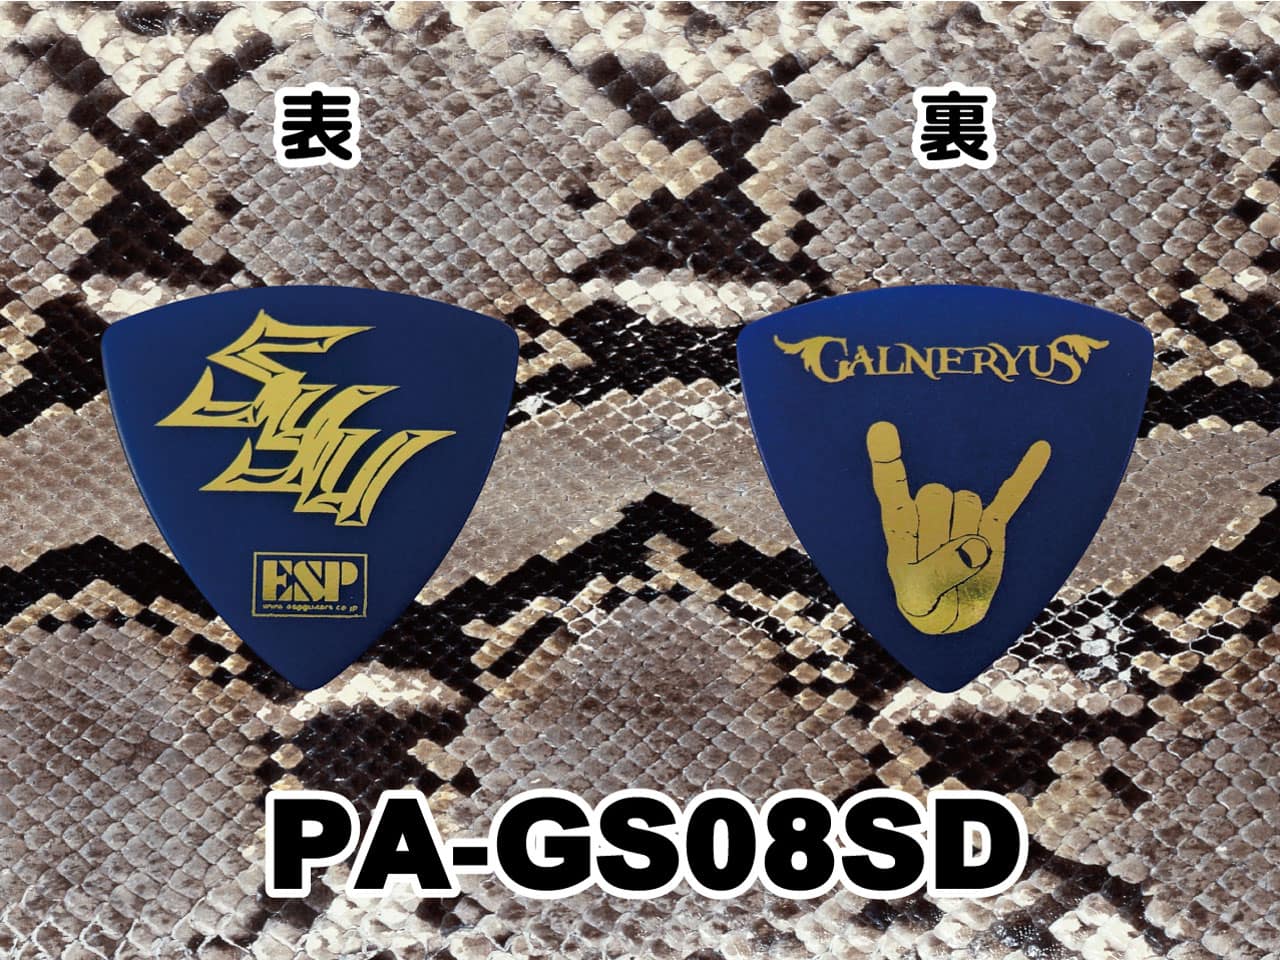 ESP(イーエスピー) Artist Pick Series PA-GS08SD (GALNERYUS/SYUモデル)